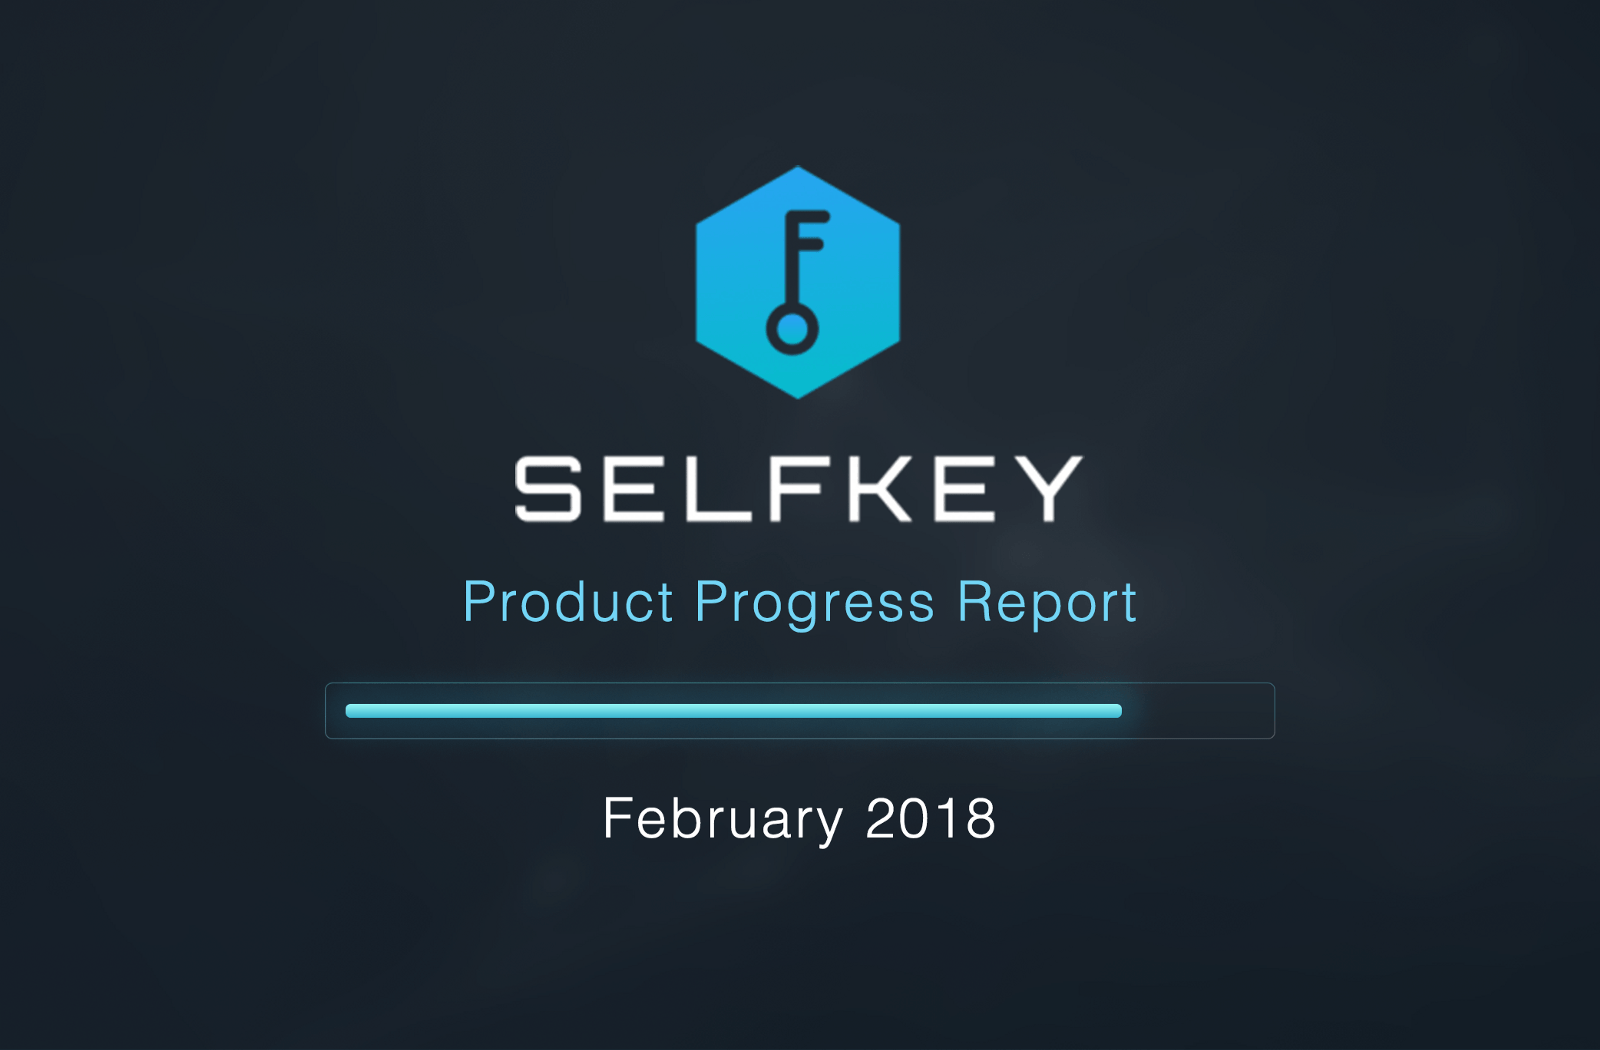 Selfkey Logo - SelfKey Product Progress Report February 2018